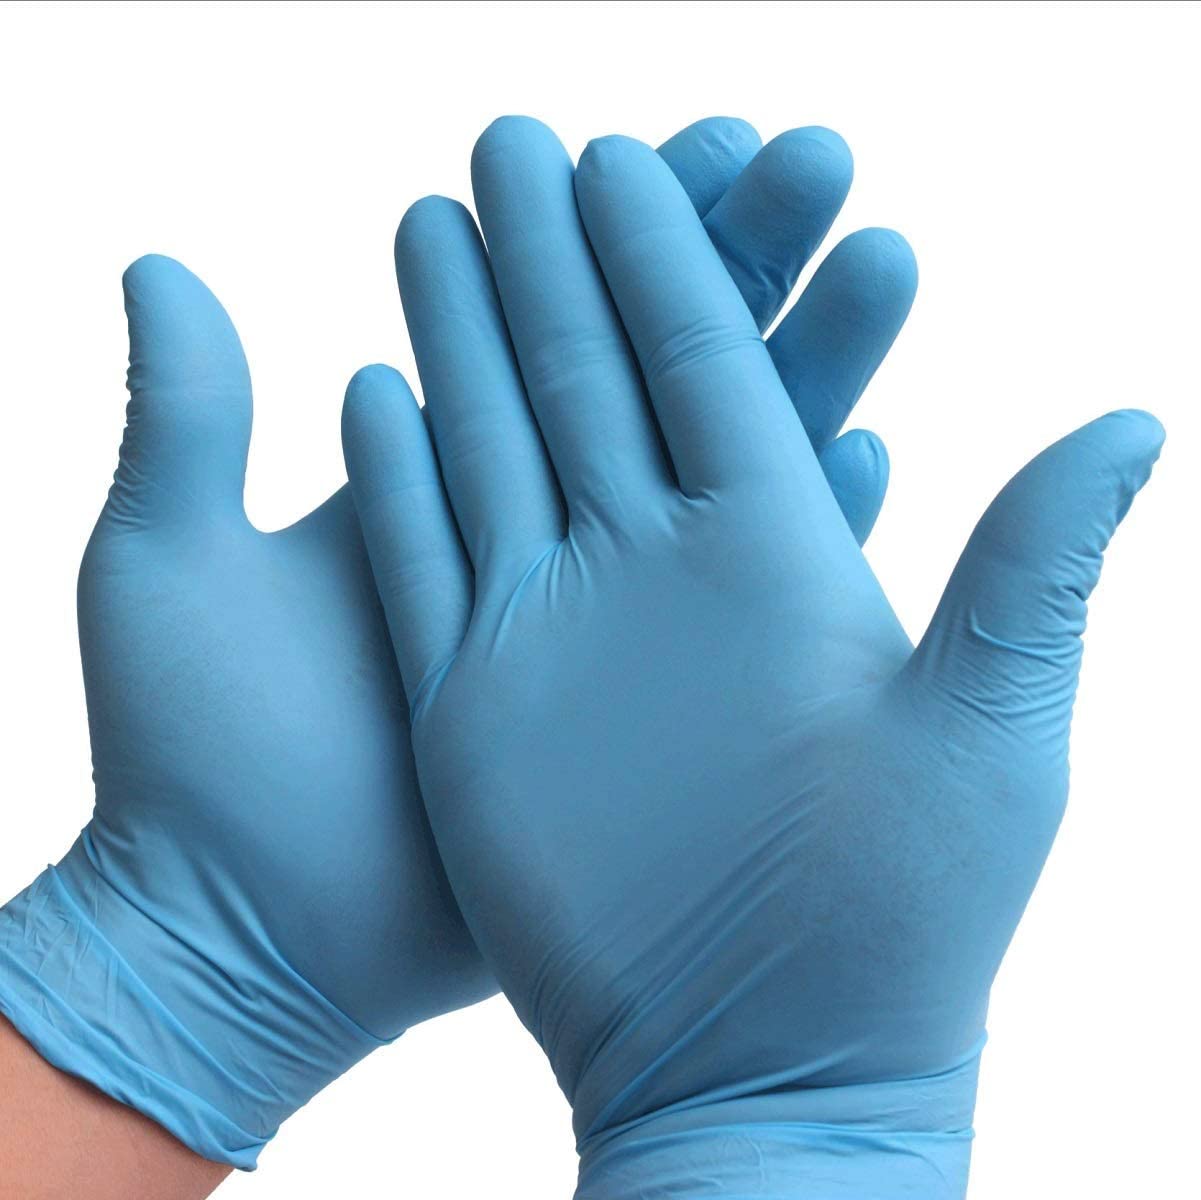 Medical Grade Disposable Nitrile Exam Gloves - Powder Free & Latex Free,